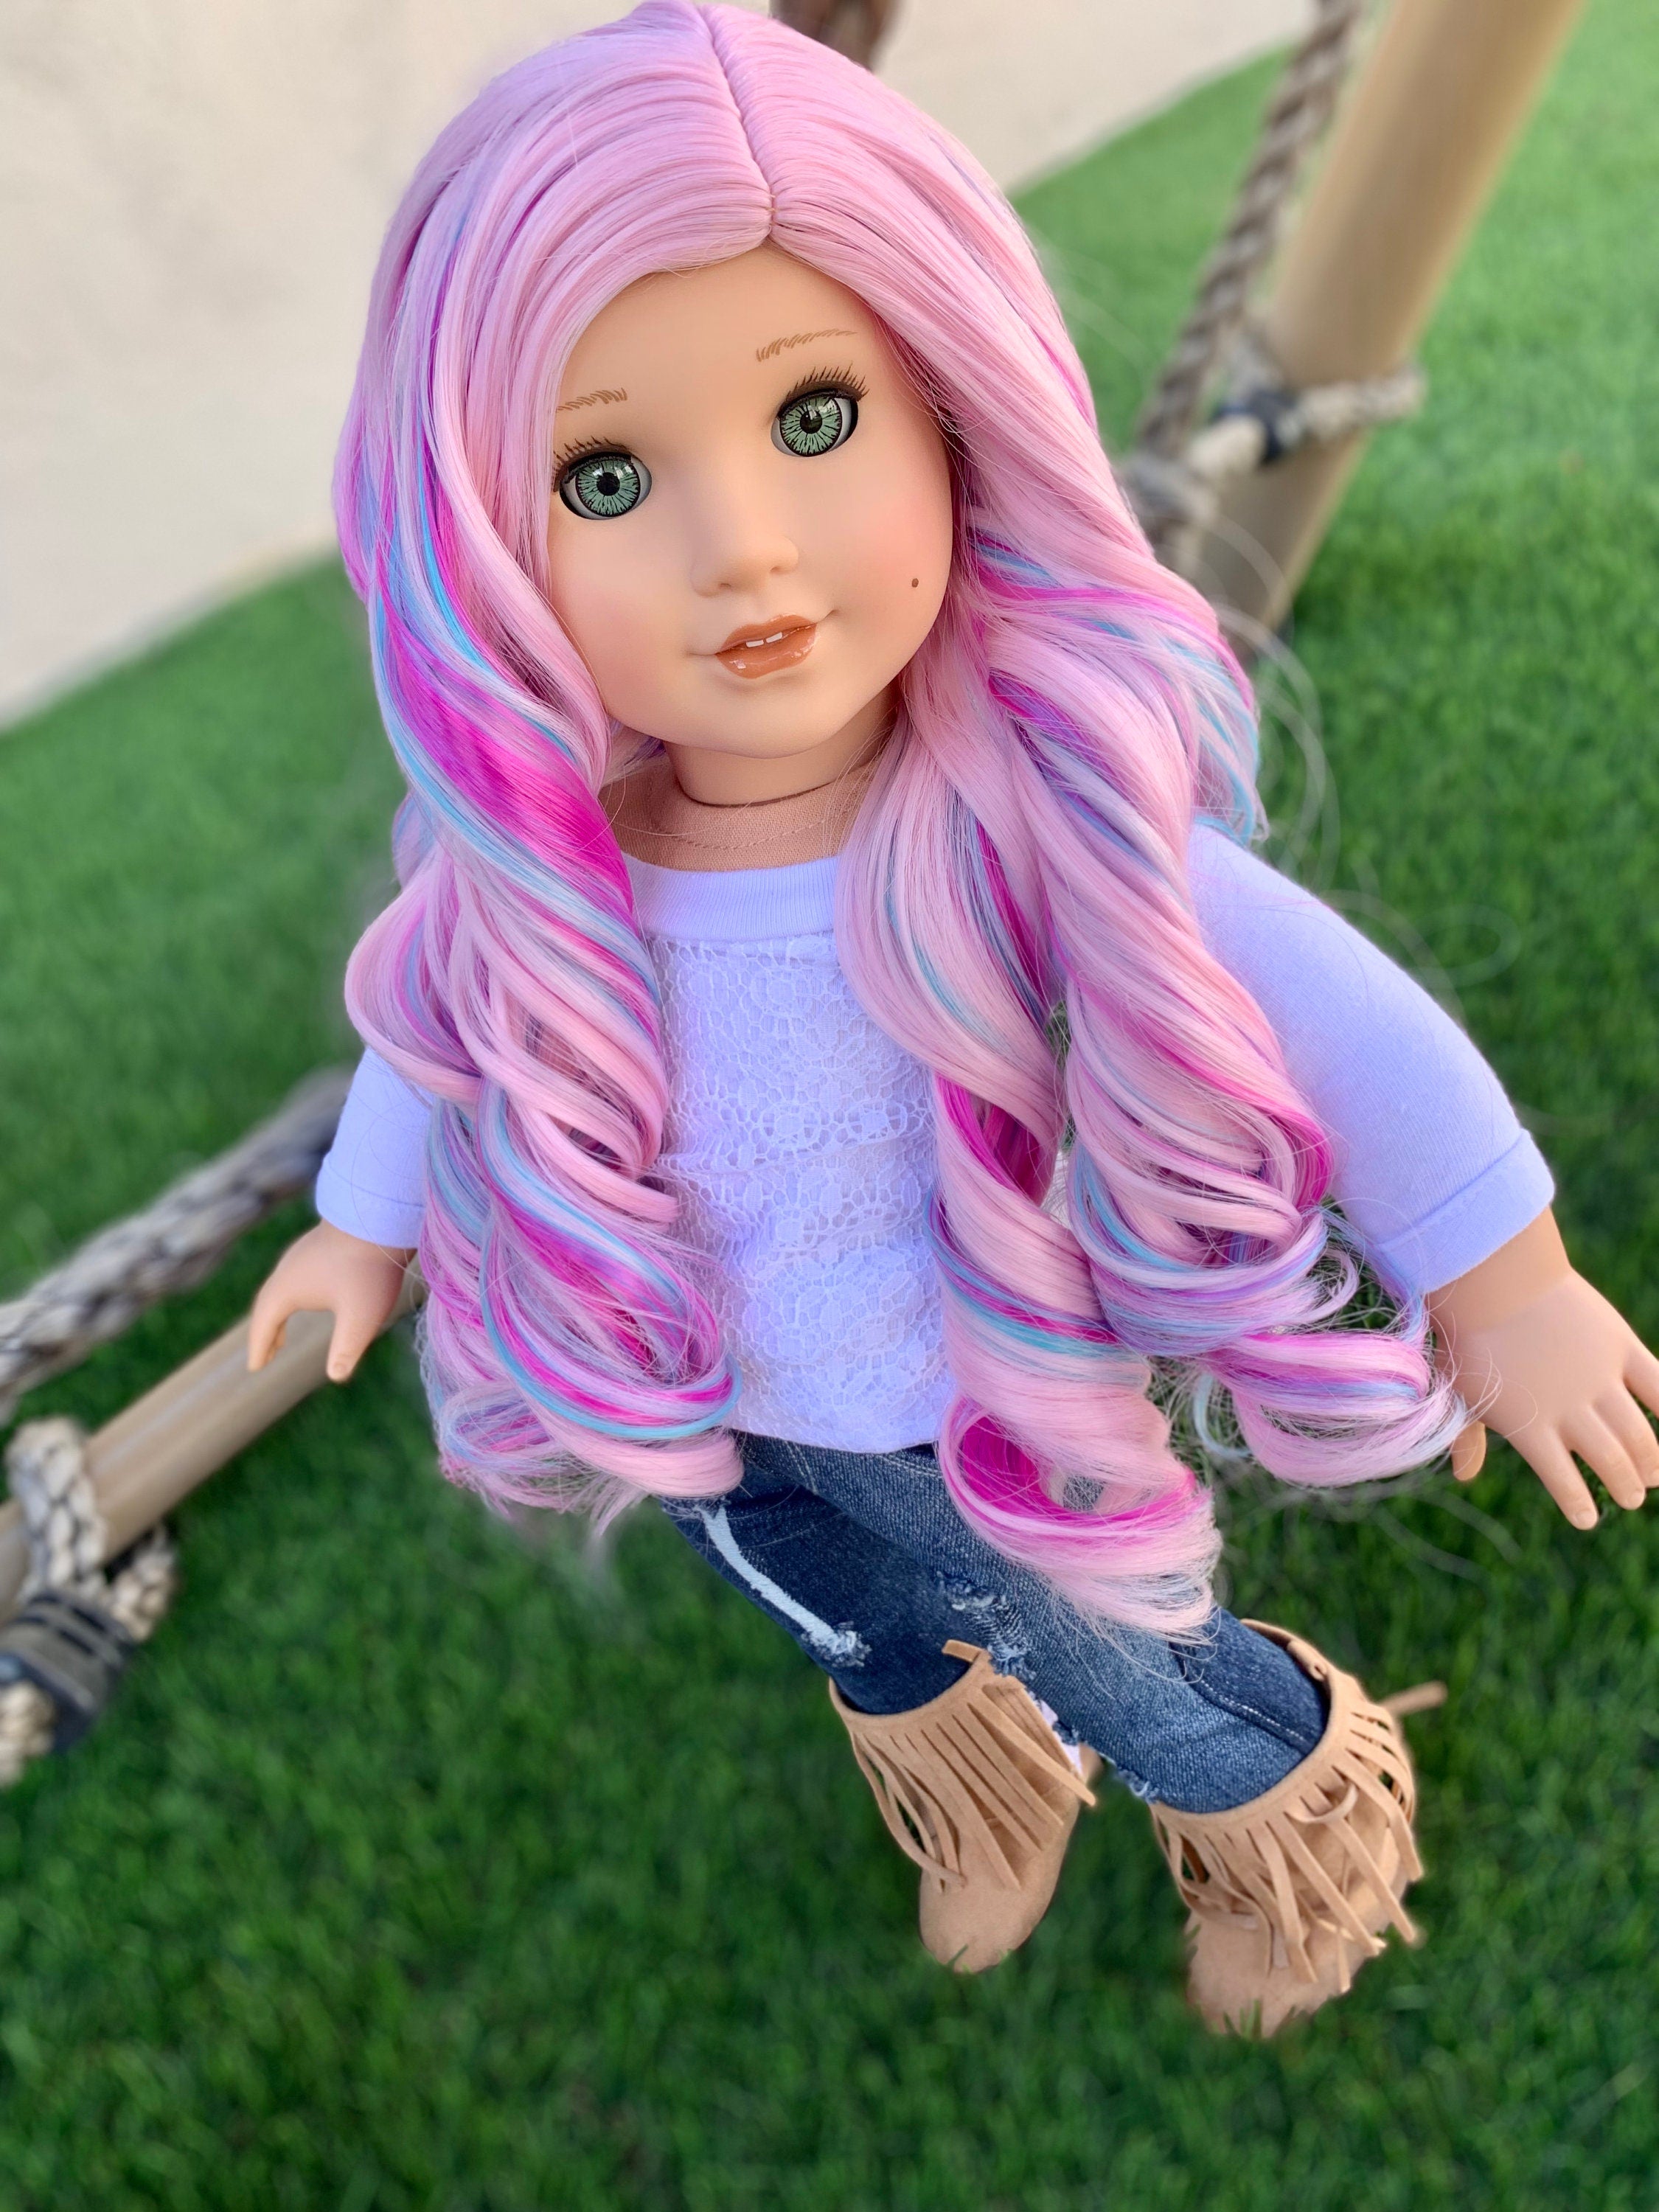 Custom doll wig for 18" American Girl Dolls -Heat & Tangle Resistant - fits 10-11"  size of 18" dolls OG Blythe BJD Gotz Rainbow Unicorn